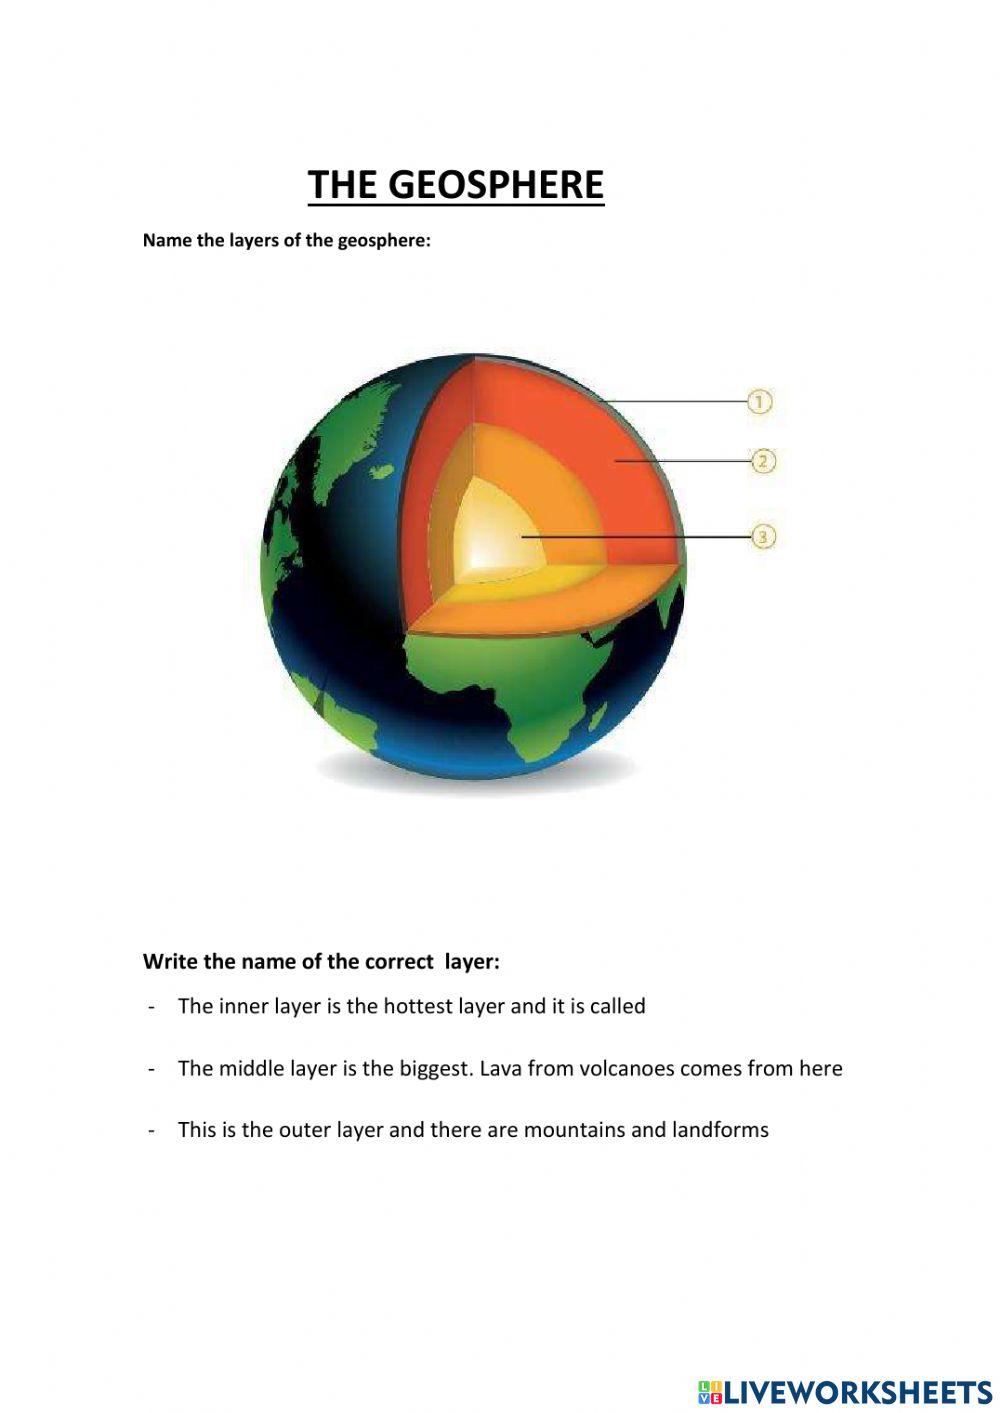 The geosphere